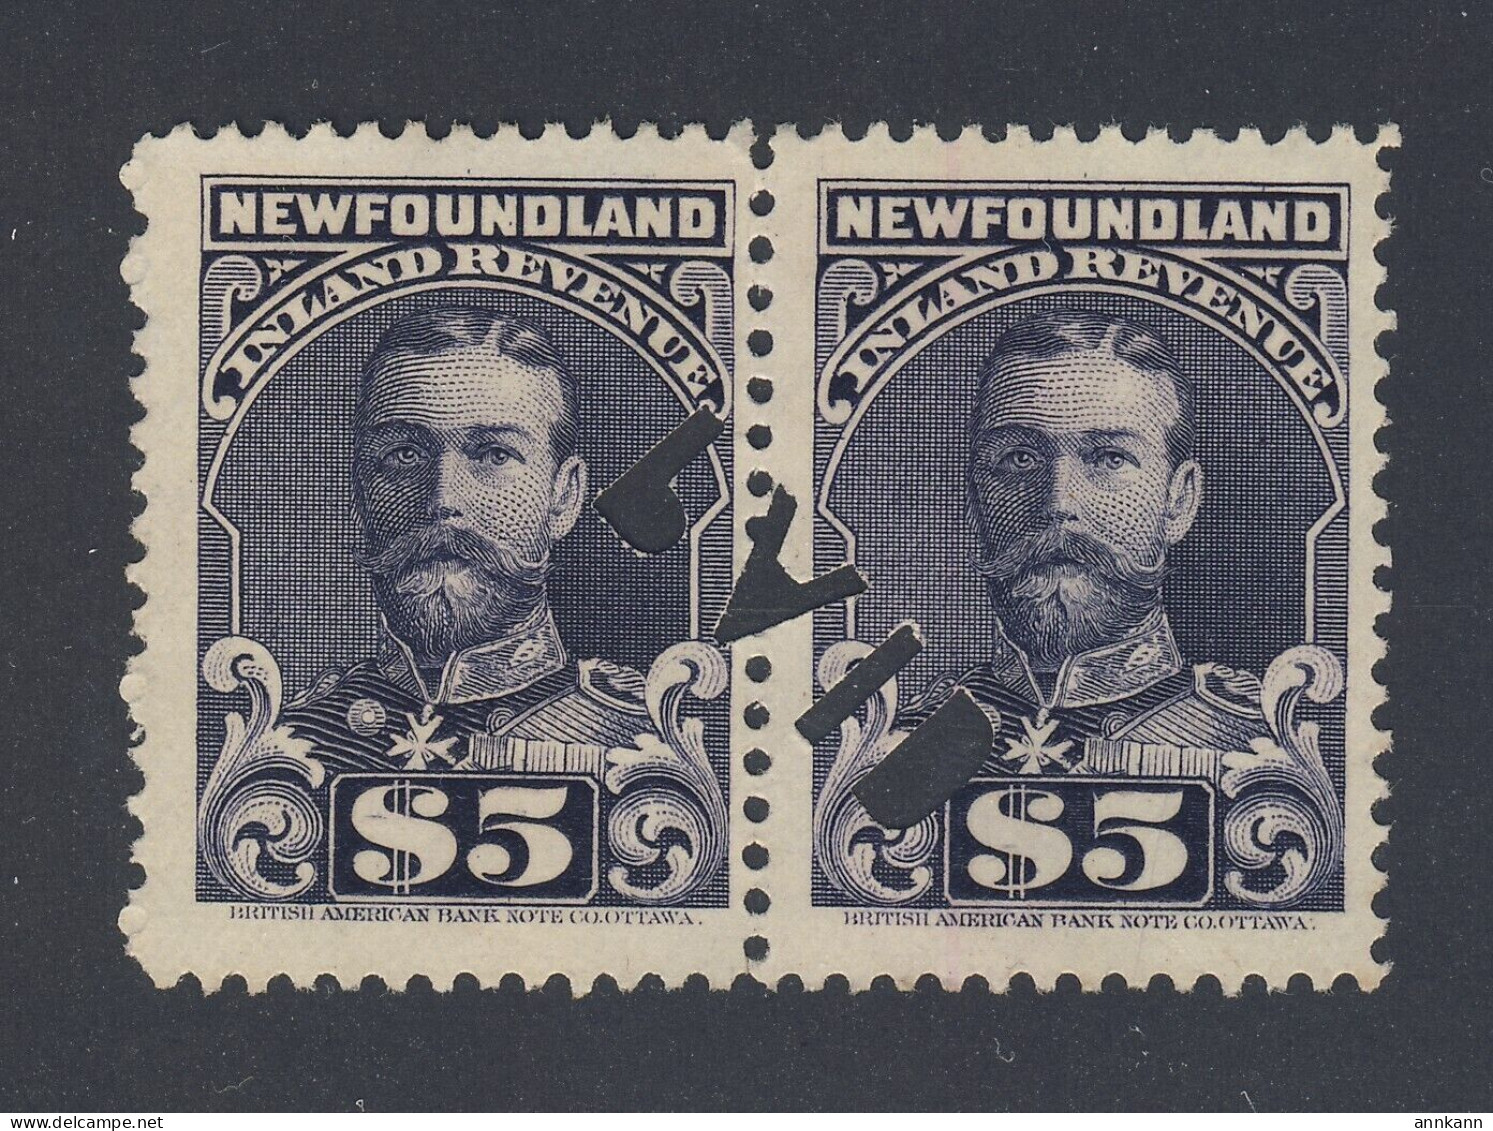 2x Newfoundland George V Revenue Stamps; Pair #NFR21-$5.00 Perf 11 GV= $150.00 - Revenues